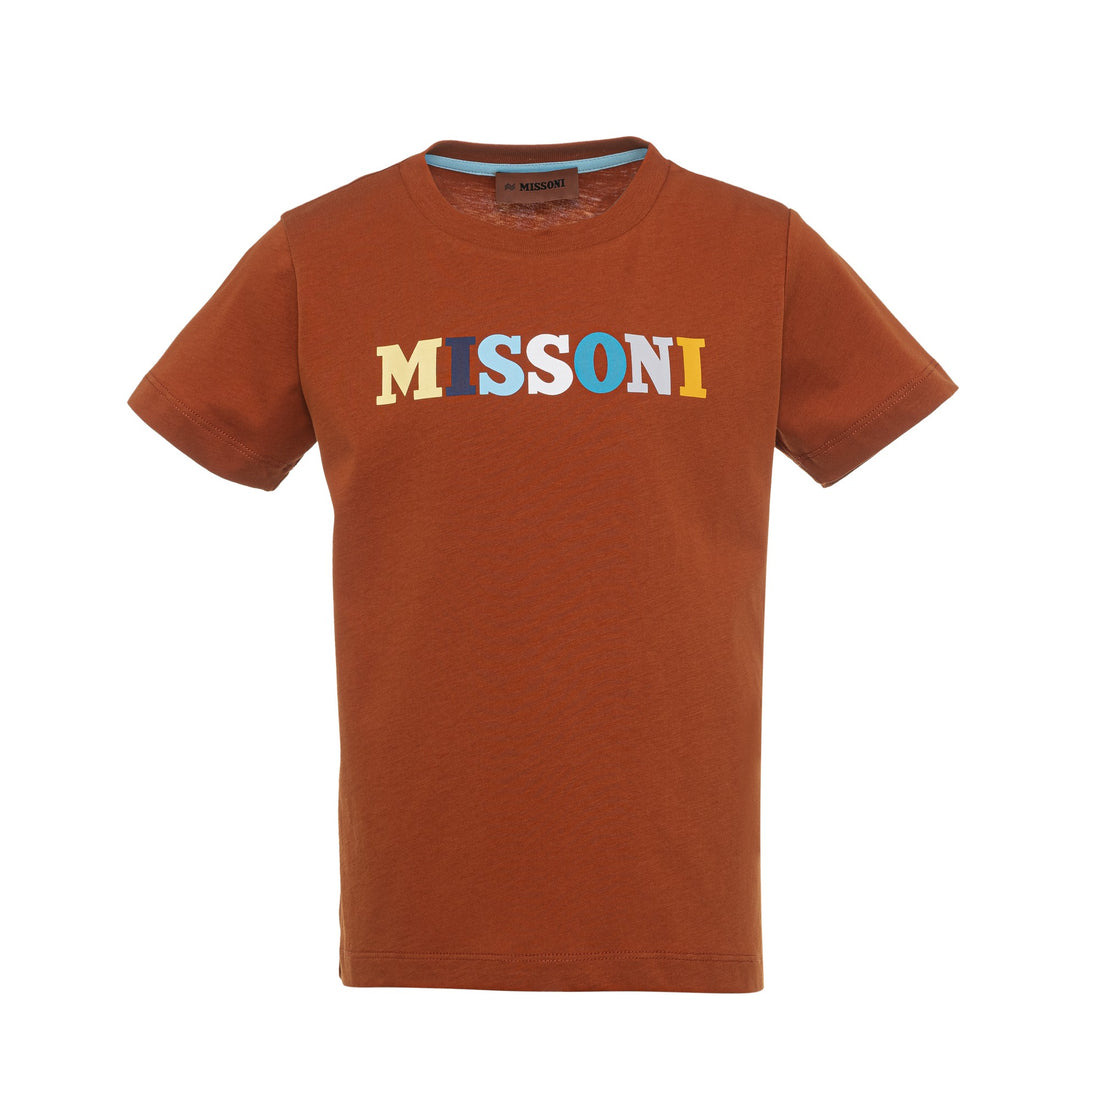 Missoni T-Shirt/Top Style: Ms8P21300